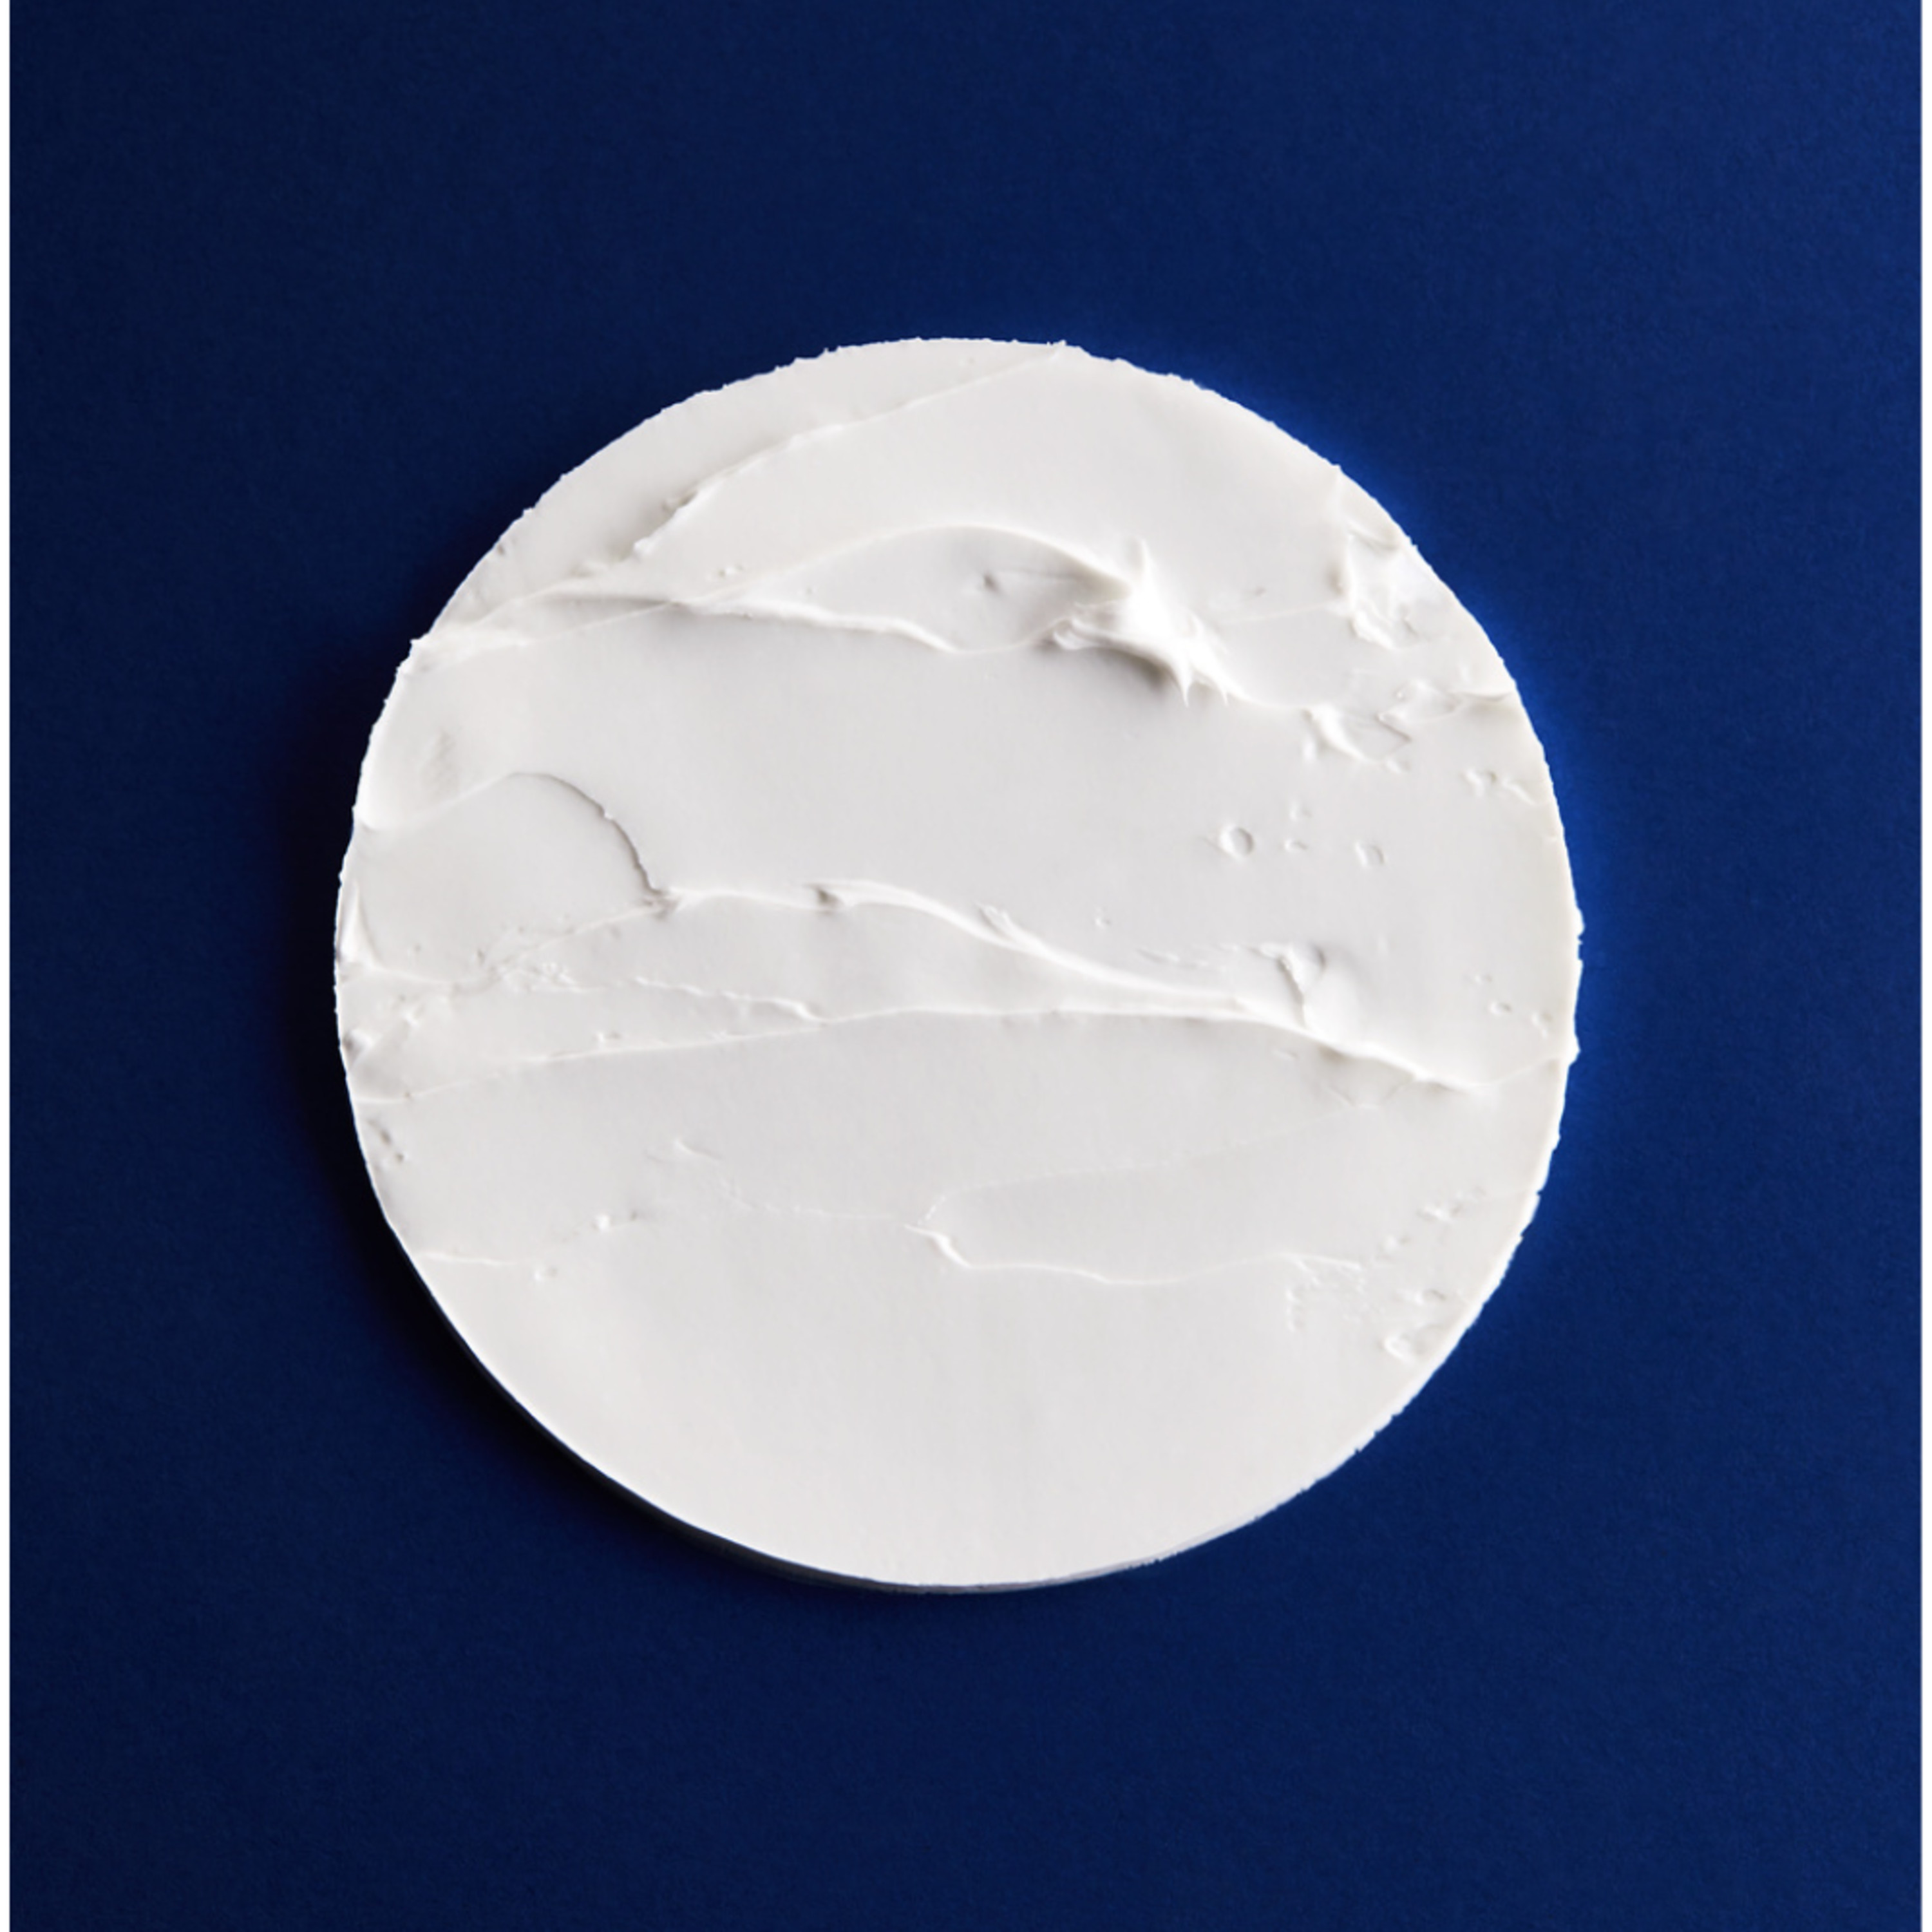 NIVEA Creme Body, Face and Hand Moisturizing Cream, 1 Oz Tin - image 11 of 13